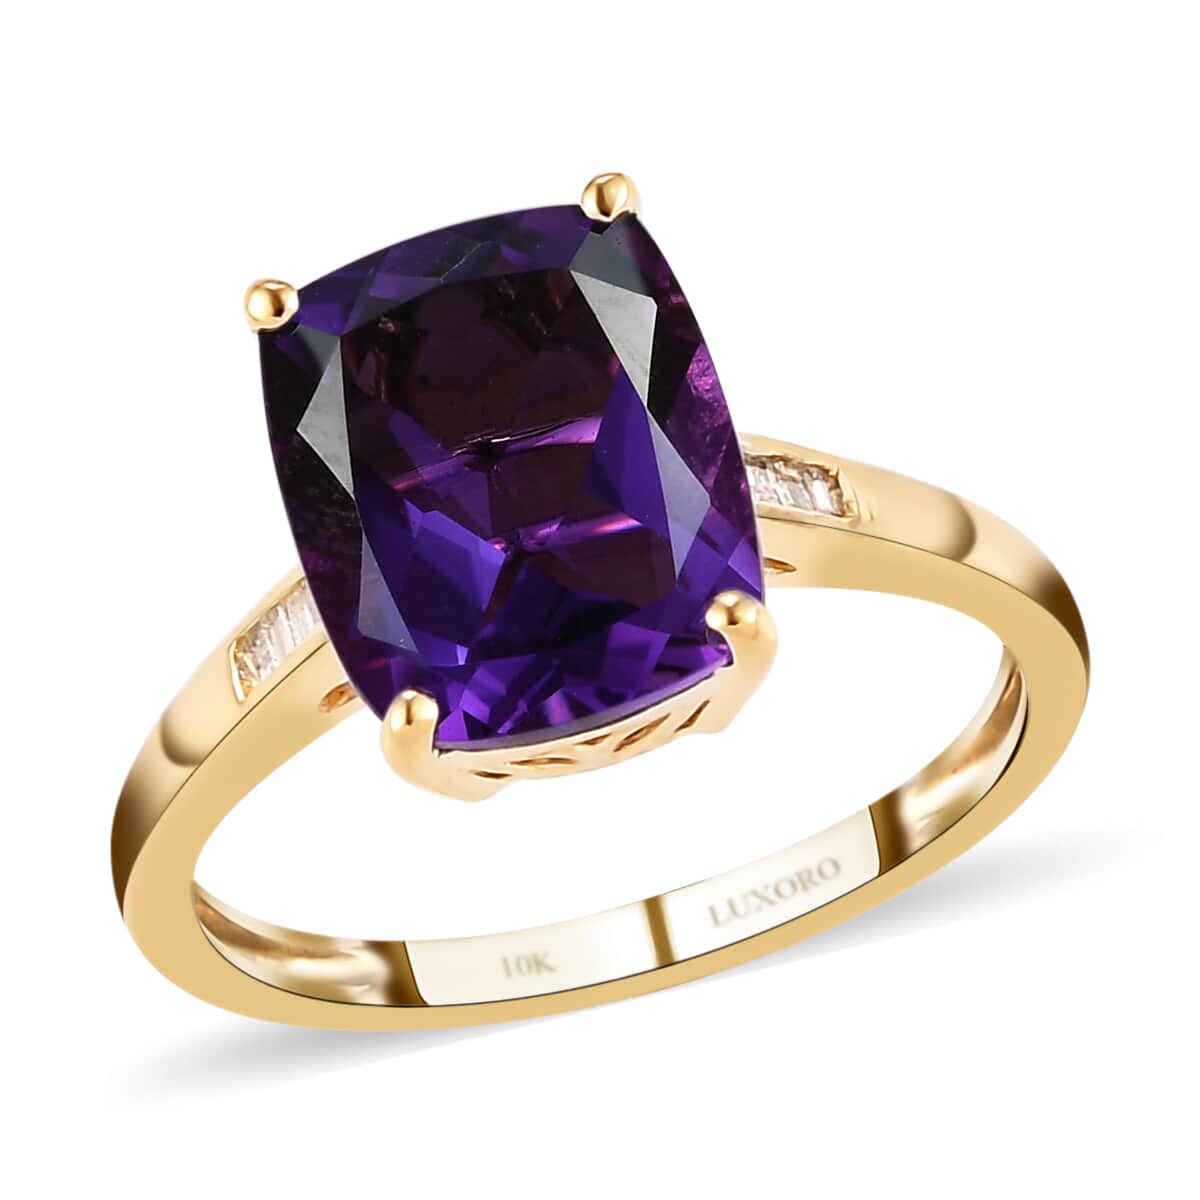 Luxoro 10K Yellow Gold AAA Mashamba Amethyst and G-H I3 Diamond Ring (Size 10.0) 3.90 ctw image number 0